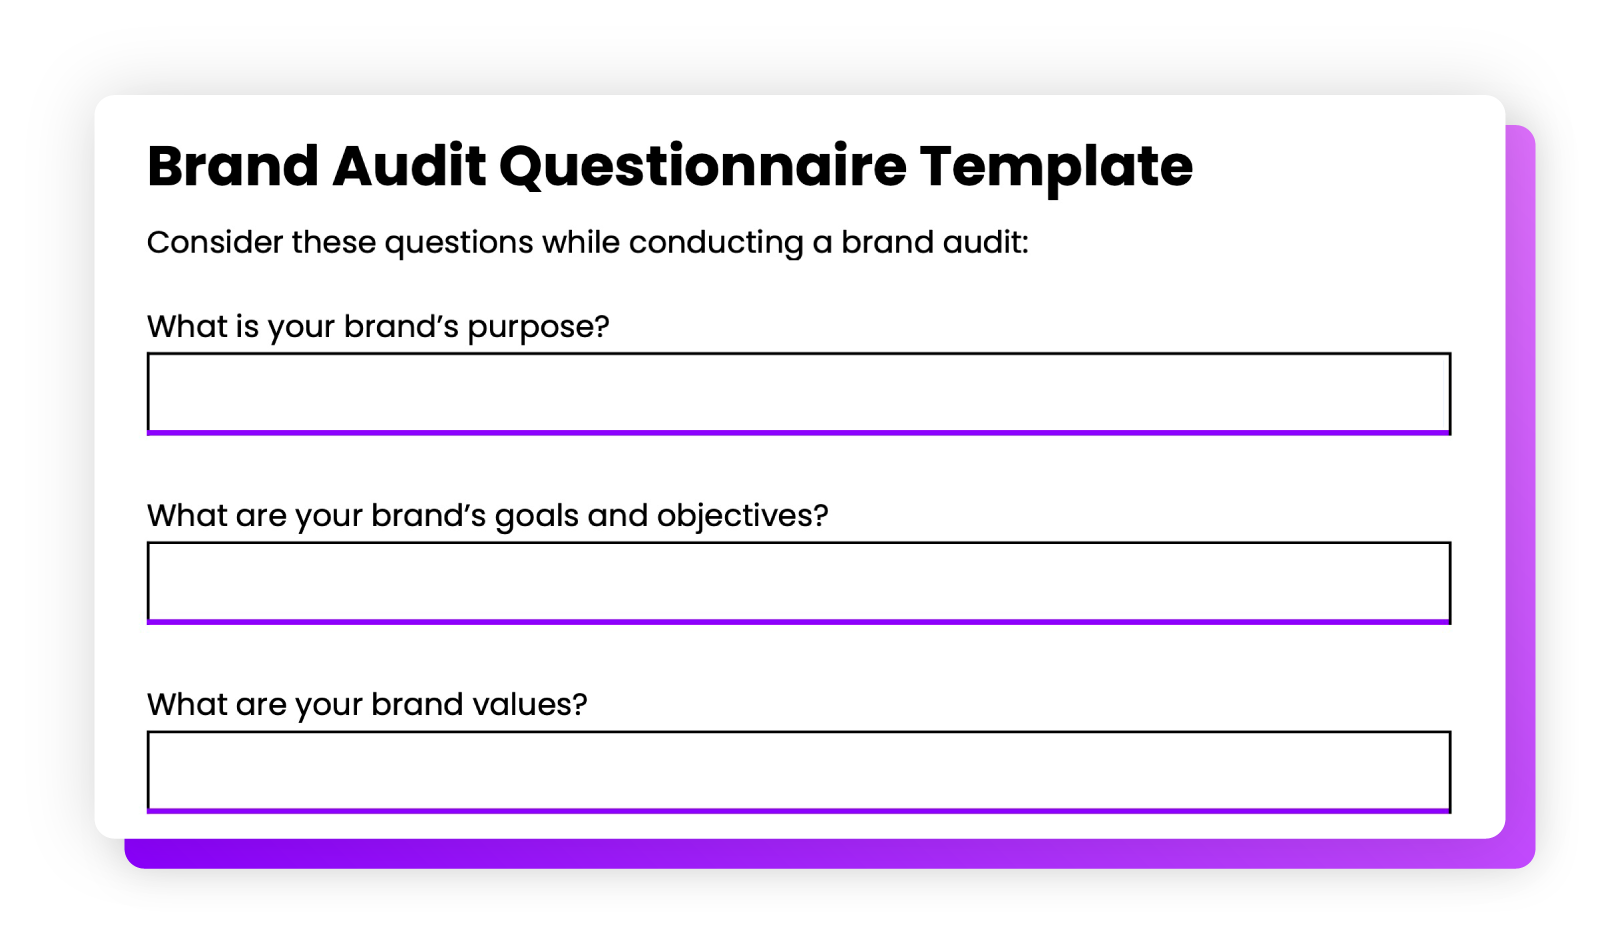 Brand audit questionnaire template mockup